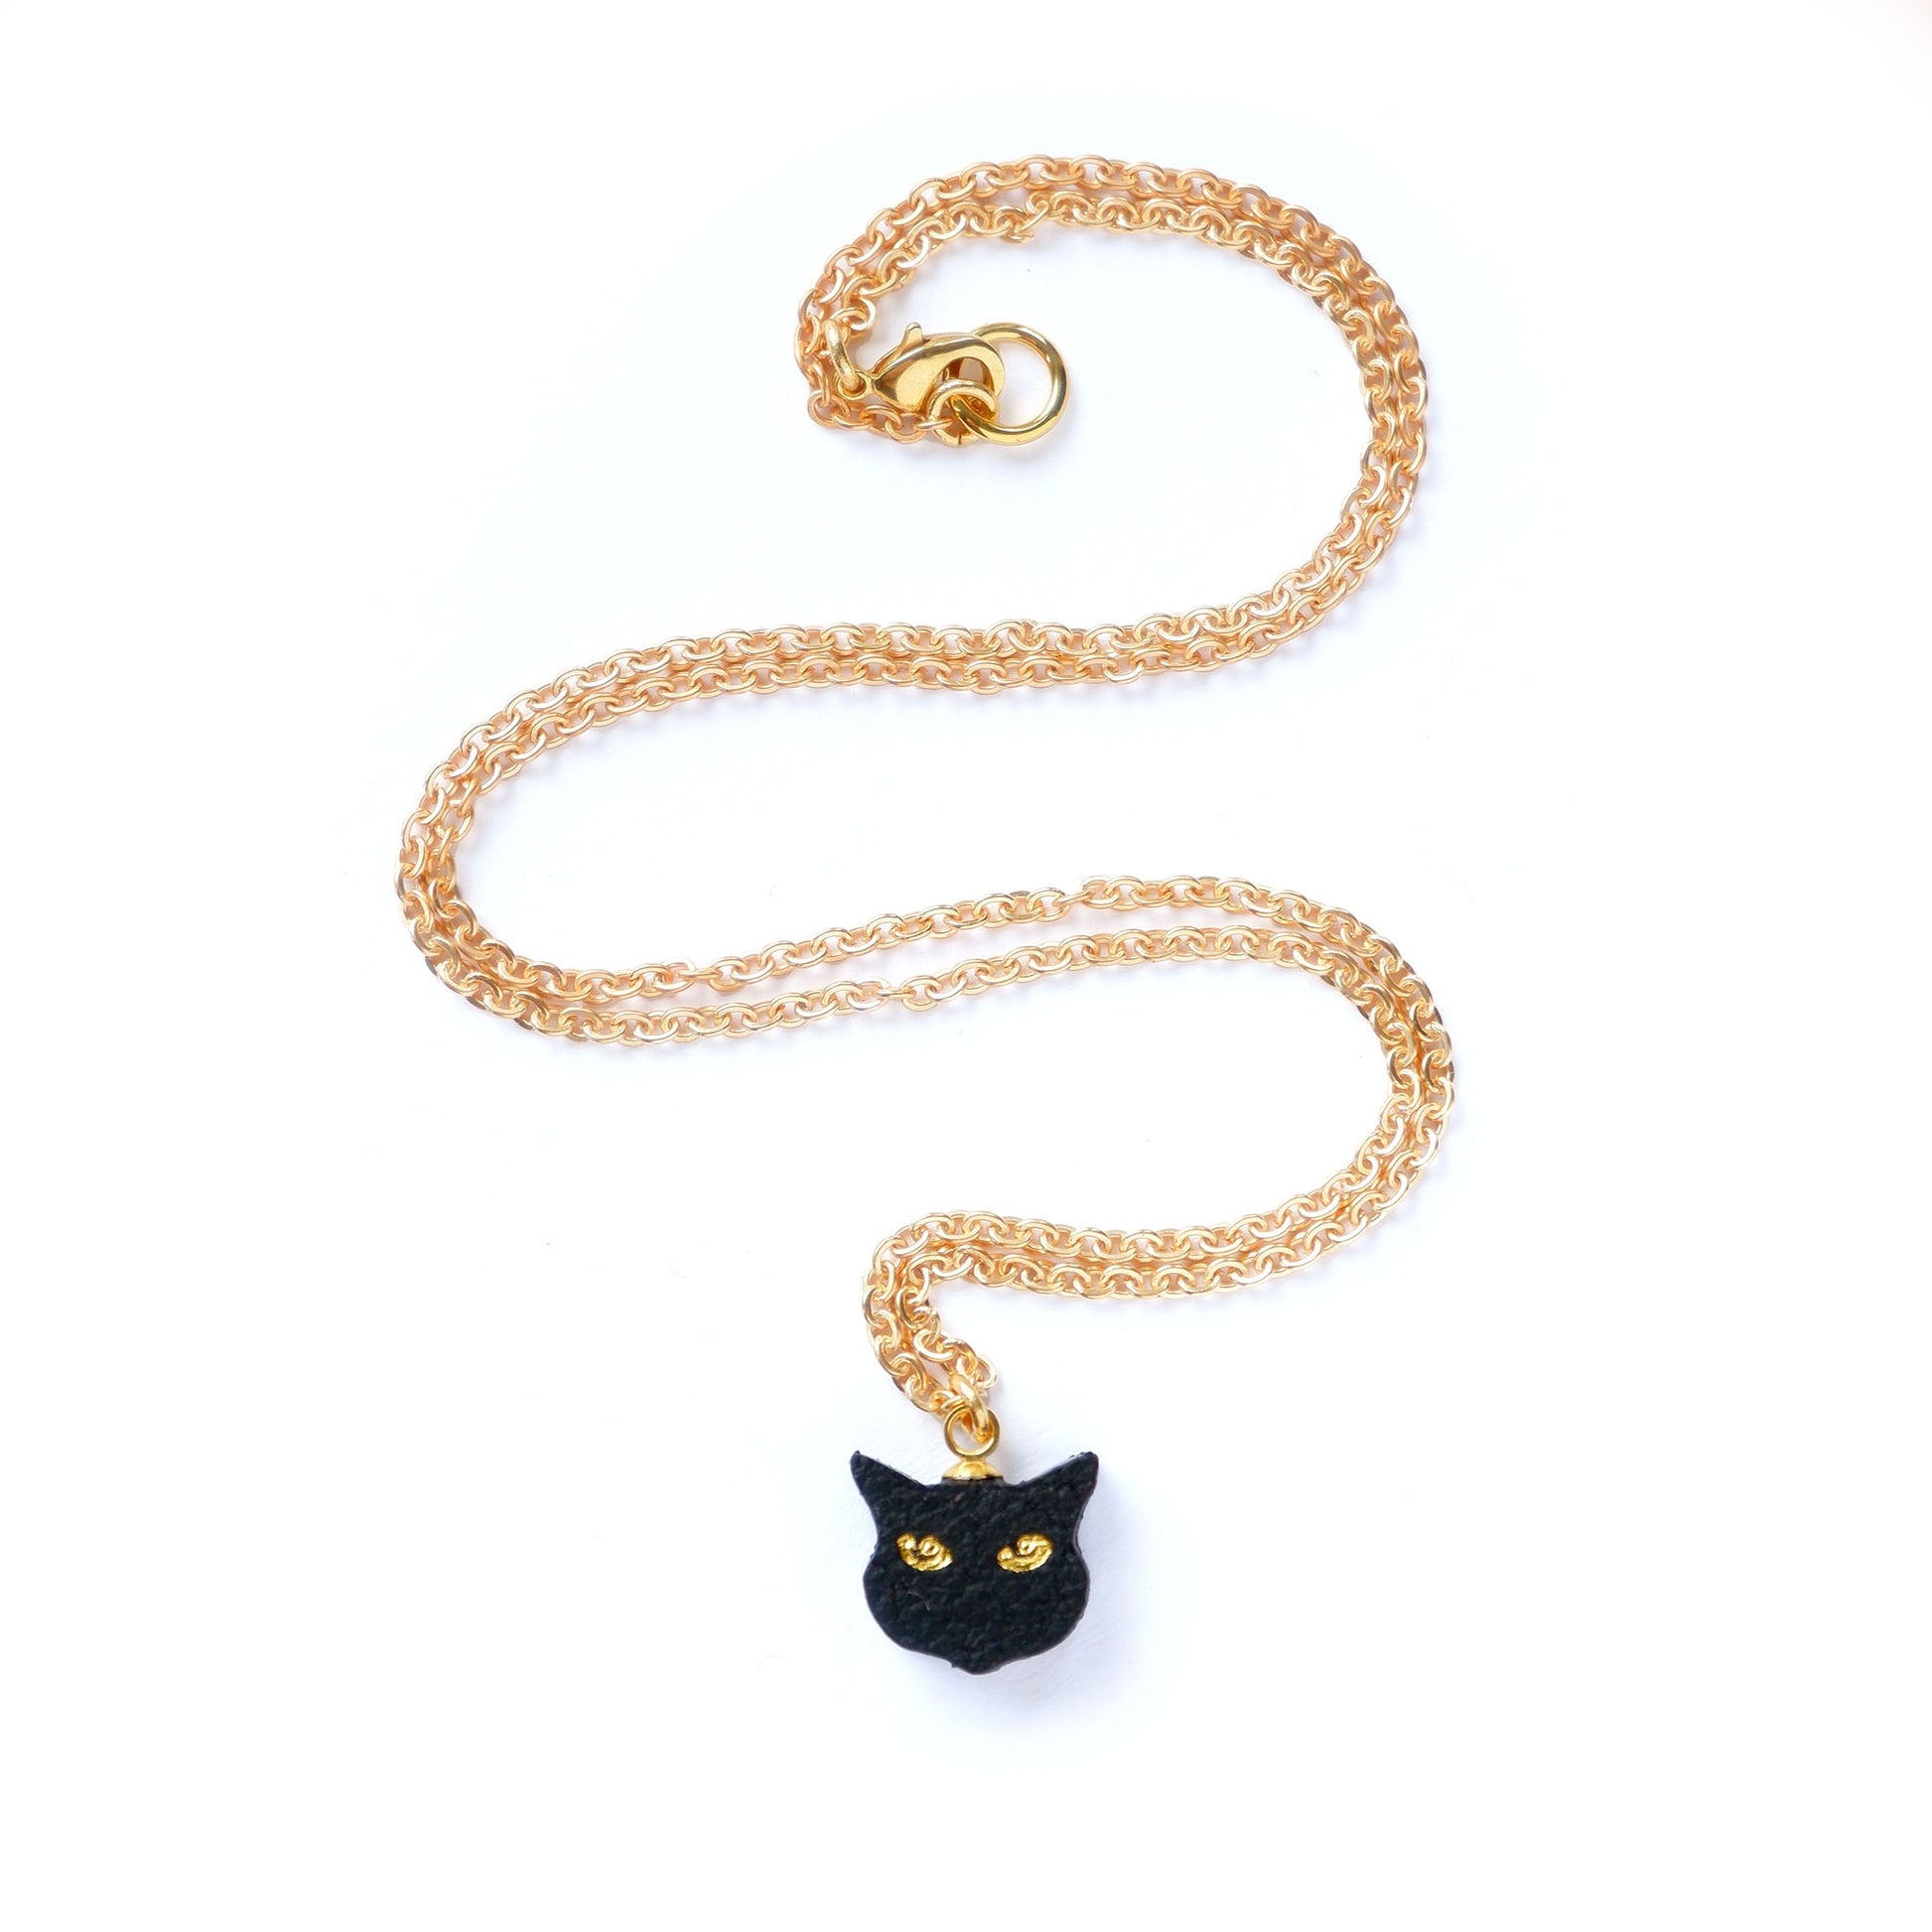 litle black cat head pendant, on fine gold chain